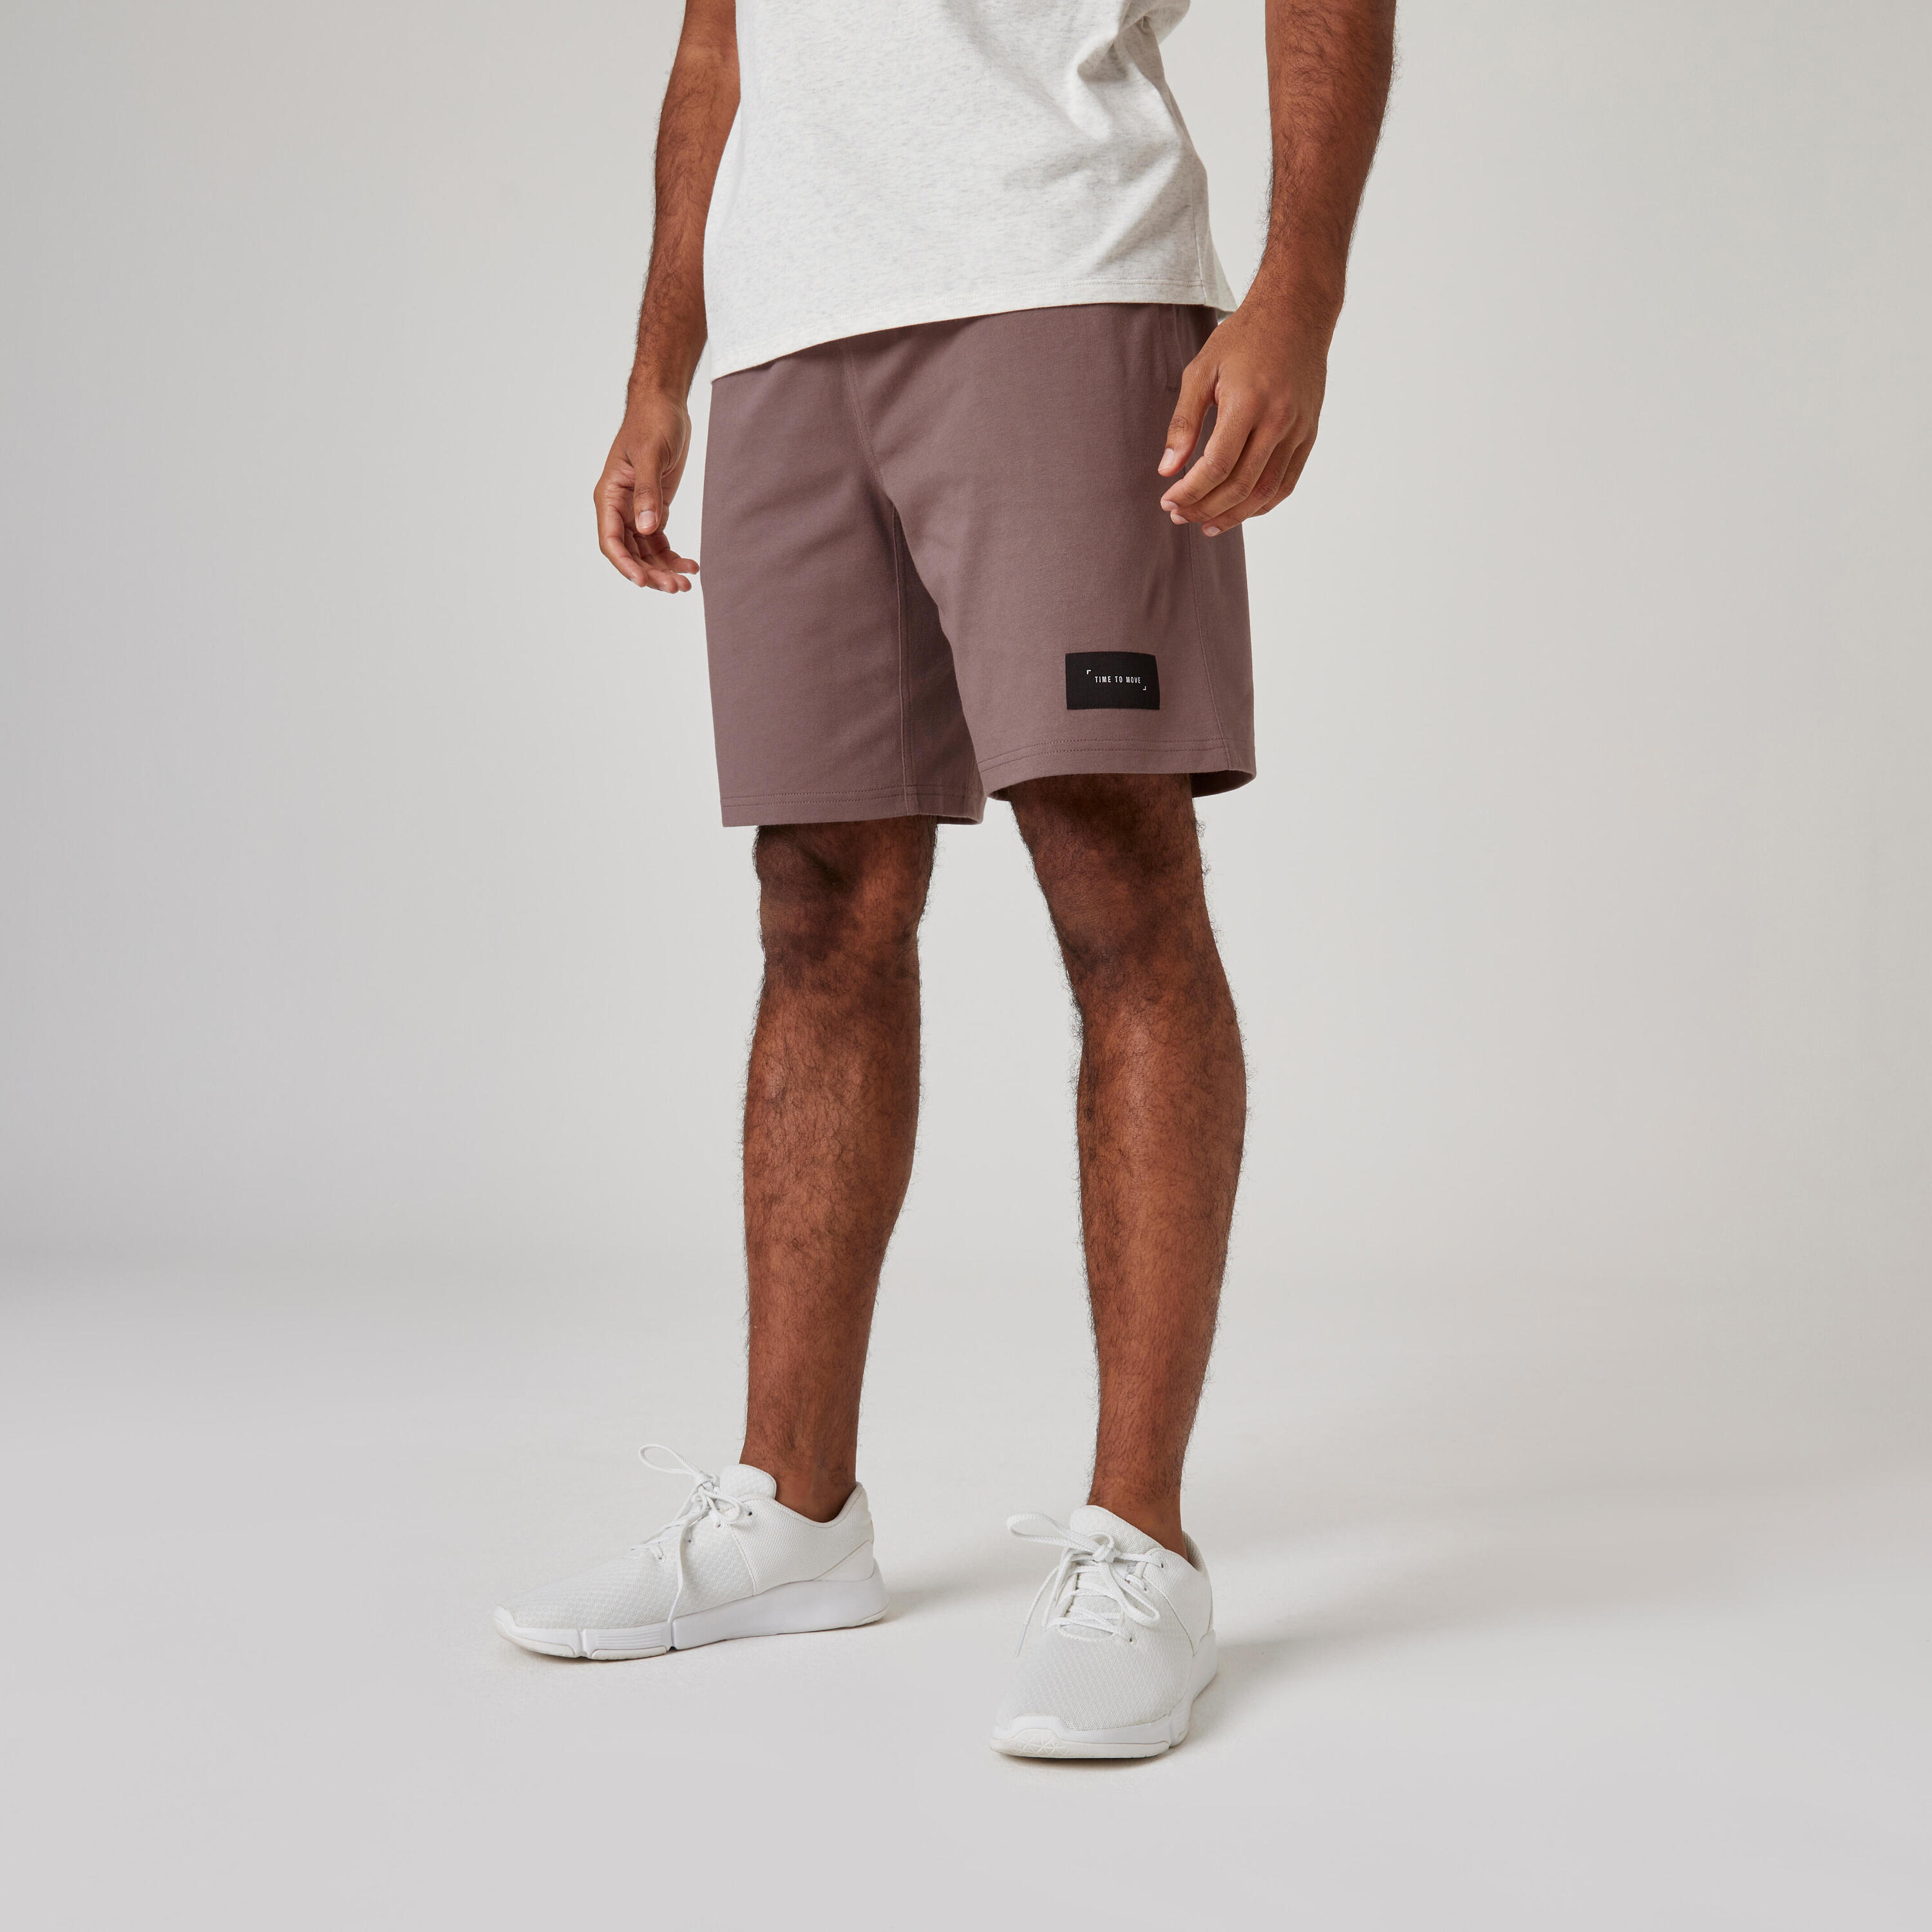 DOMYOS Men's Straight-Cut Cotton Fitness Shorts with Pocket - Grey